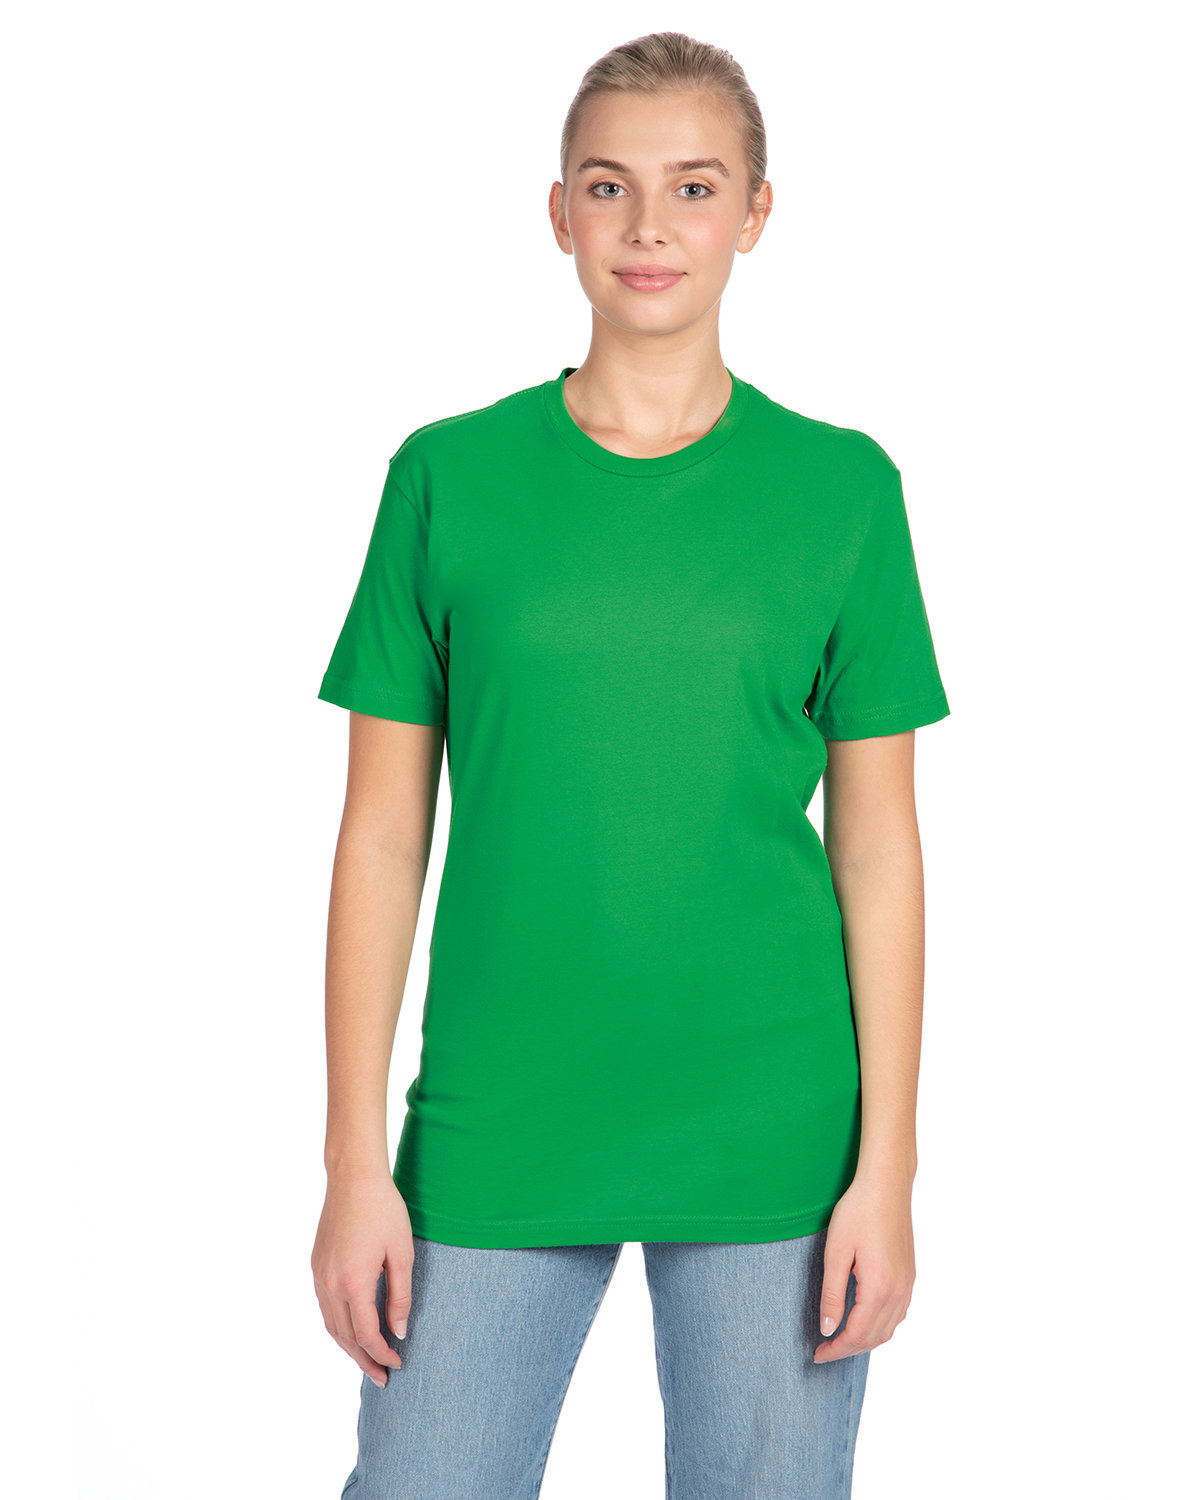 Next Level Apparel Unisex Cotton T-Shirt kelly green 